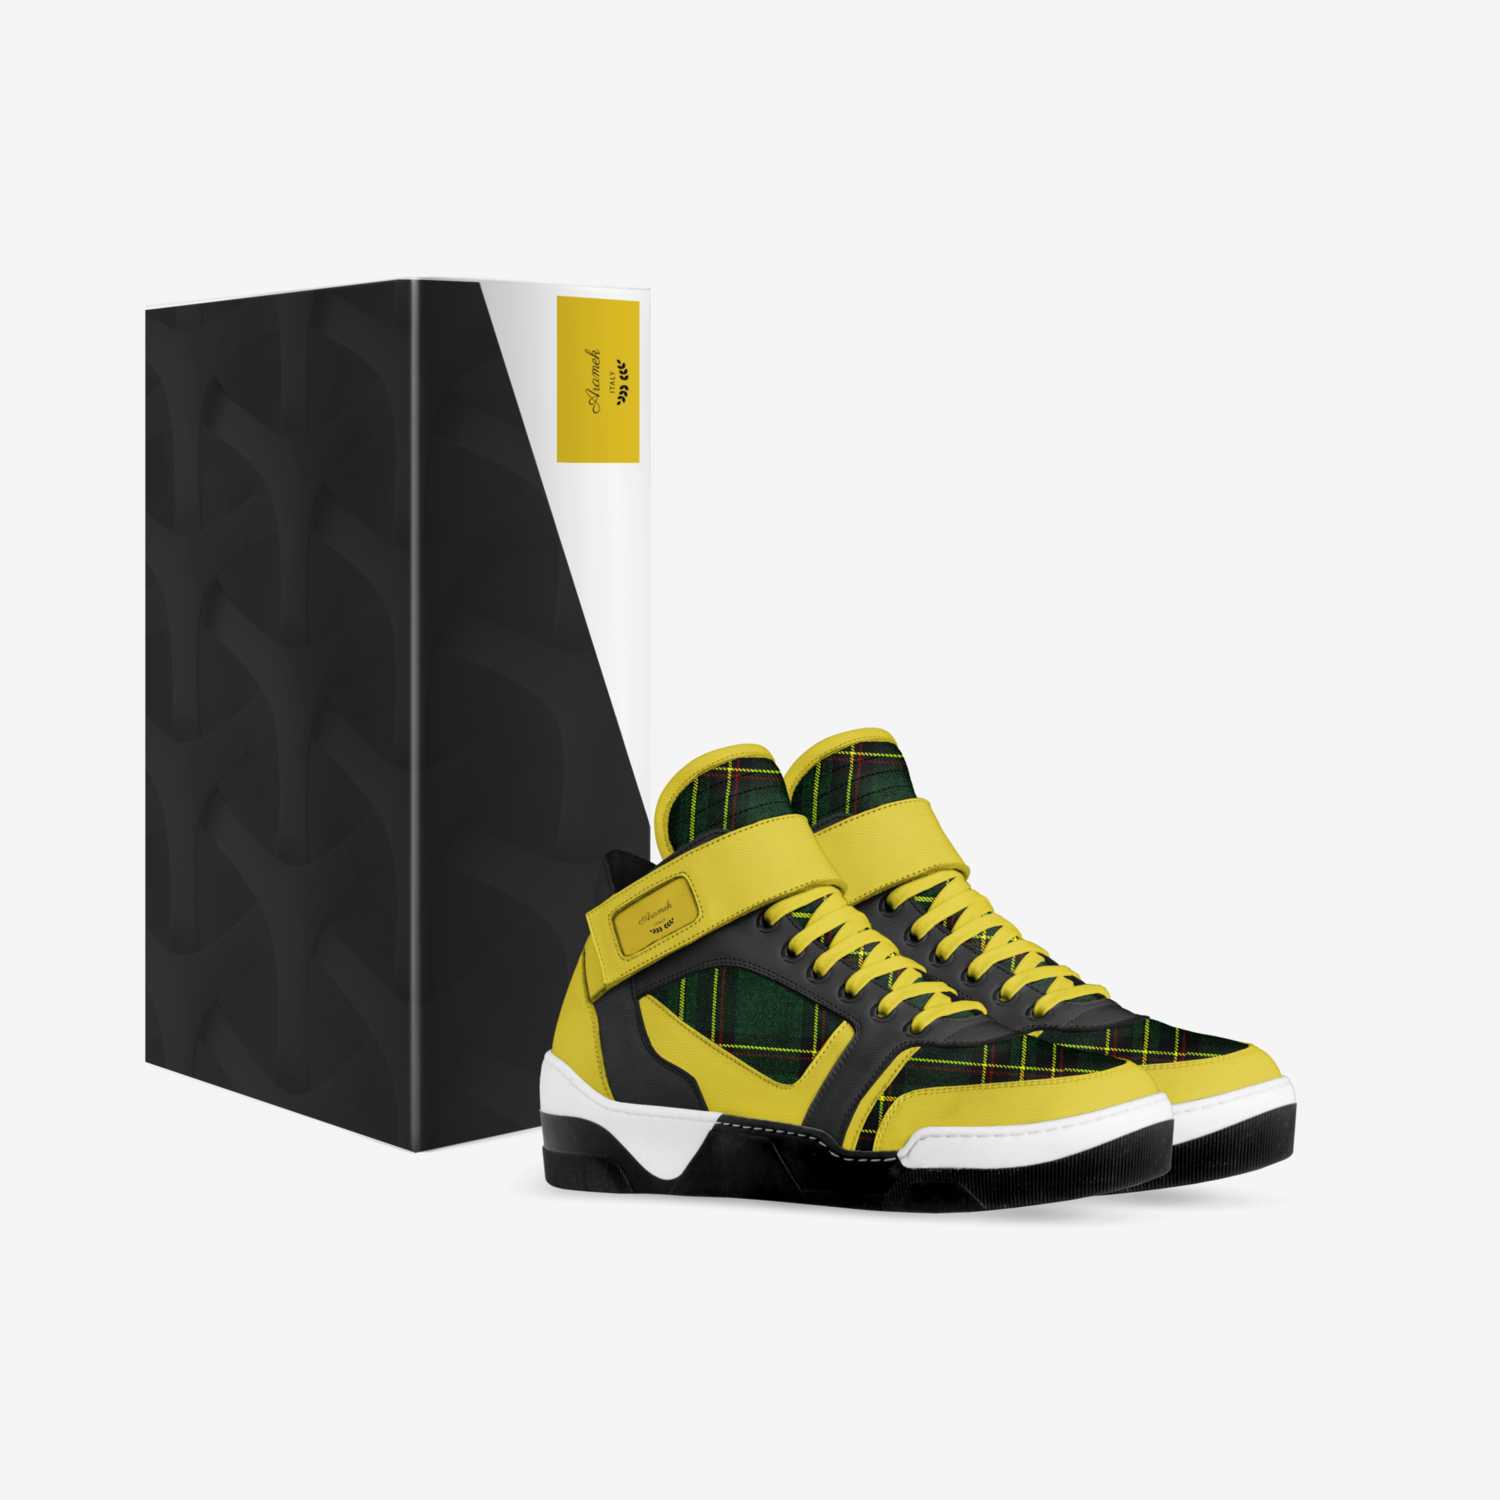 Aramek custom made in Italy shoes by Rebecca Black | Box view